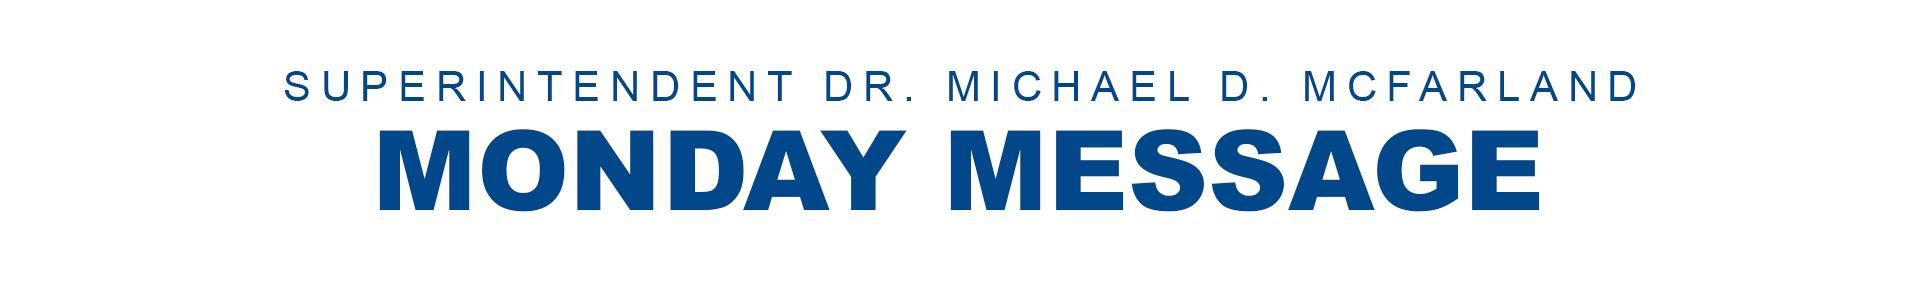 Superintendent Dr. Michael D. McFarland Monday Message